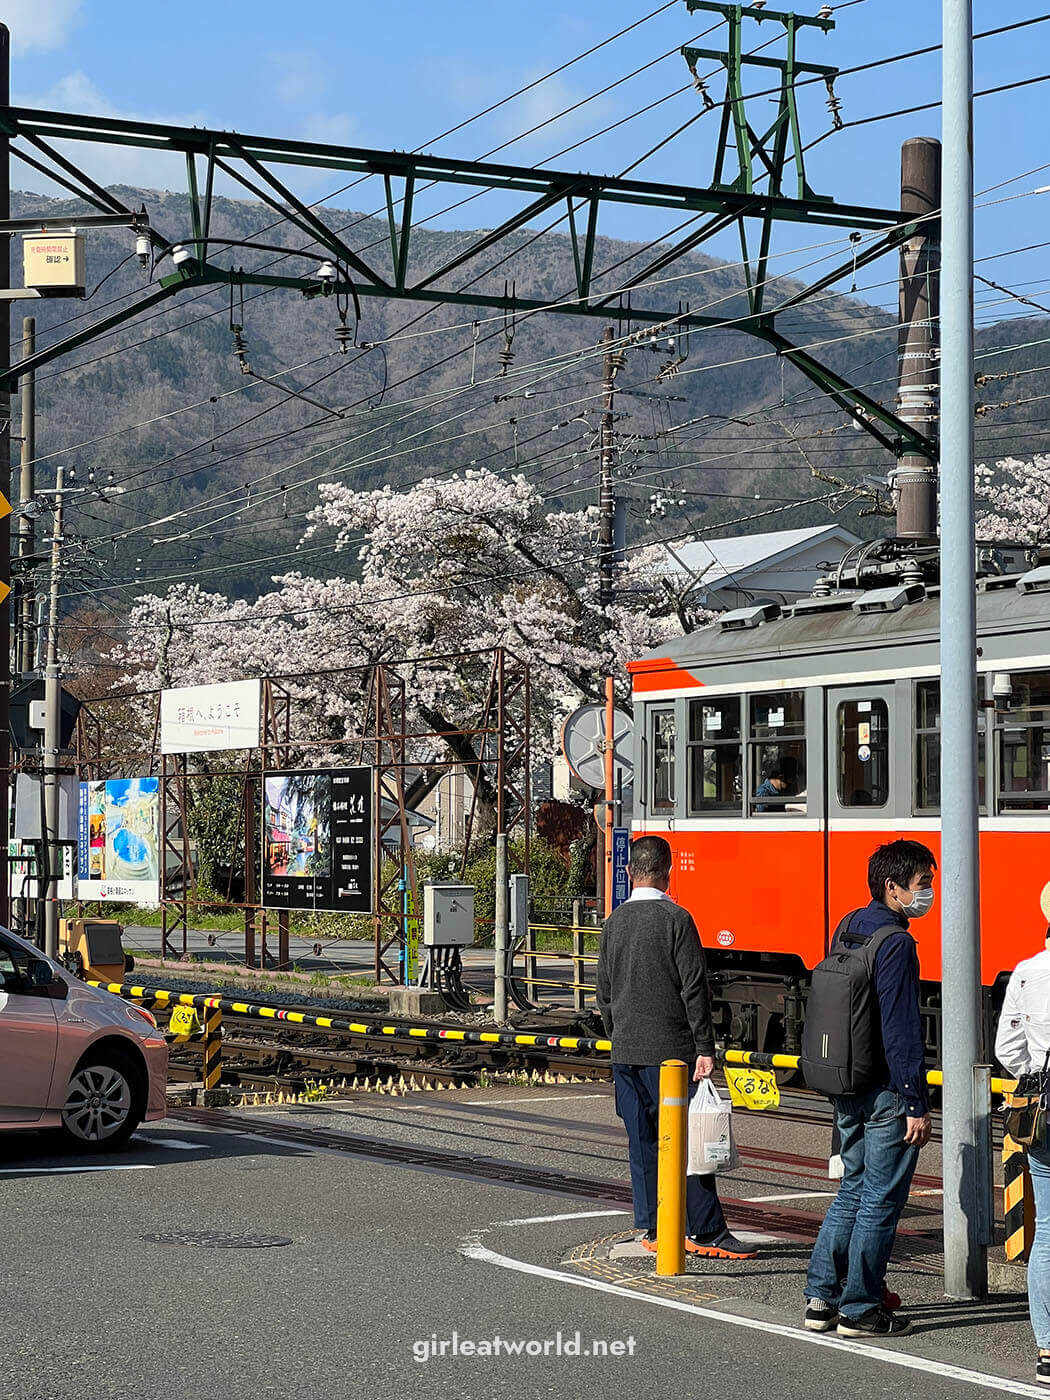 Hakone Travel Guide - A train in Hakone